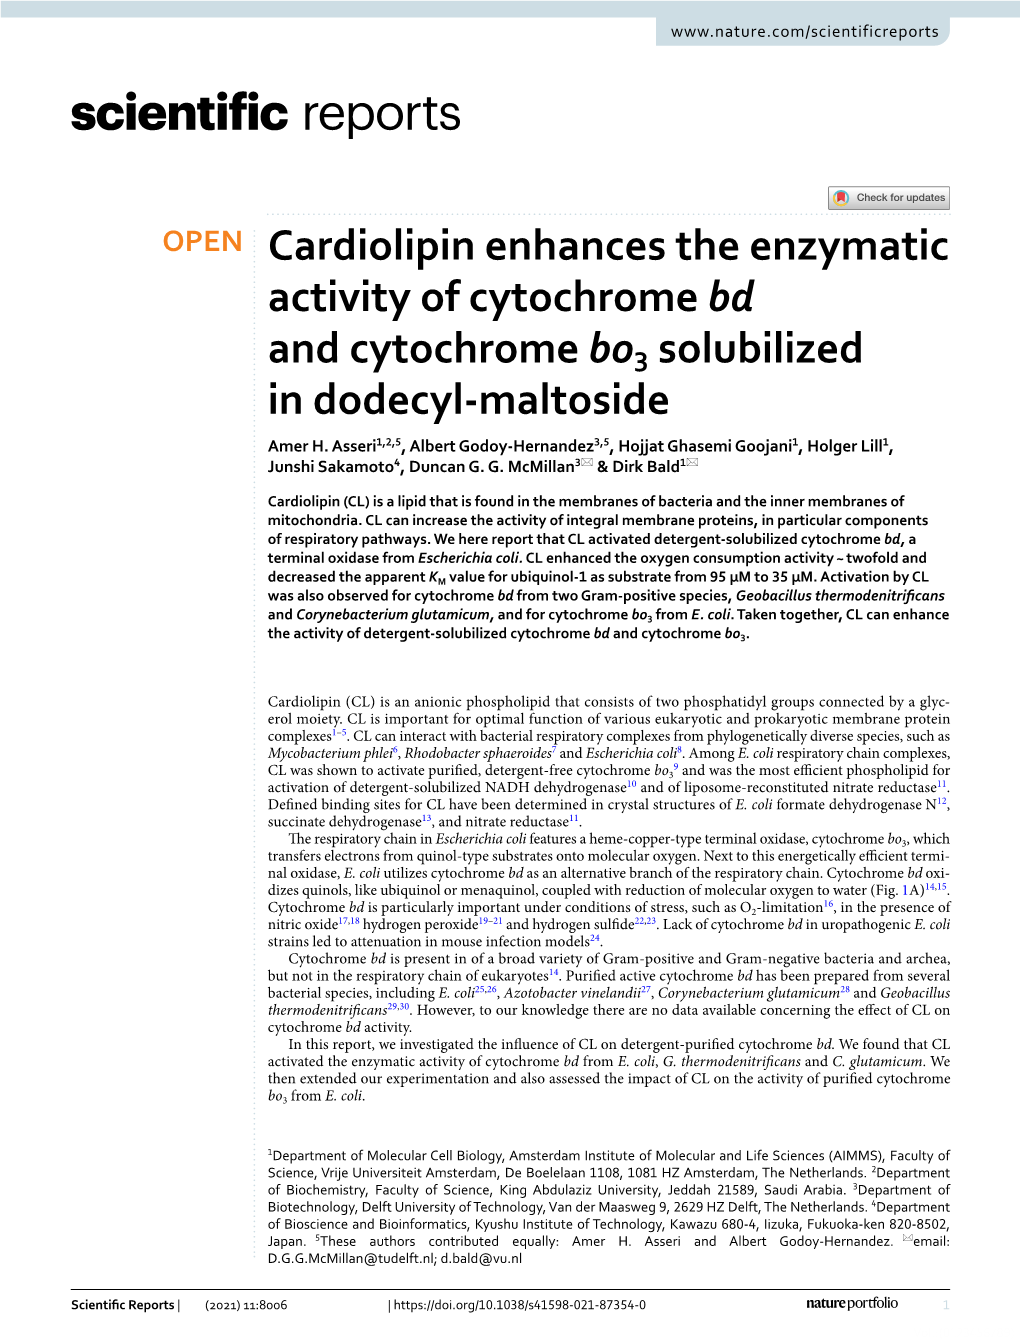 Cardiolipin Enhances the Enzymatic Activity of Cytochrome Bd and Cytochrome Bo3 Solubilized in Dodecyl‑Maltoside Amer H